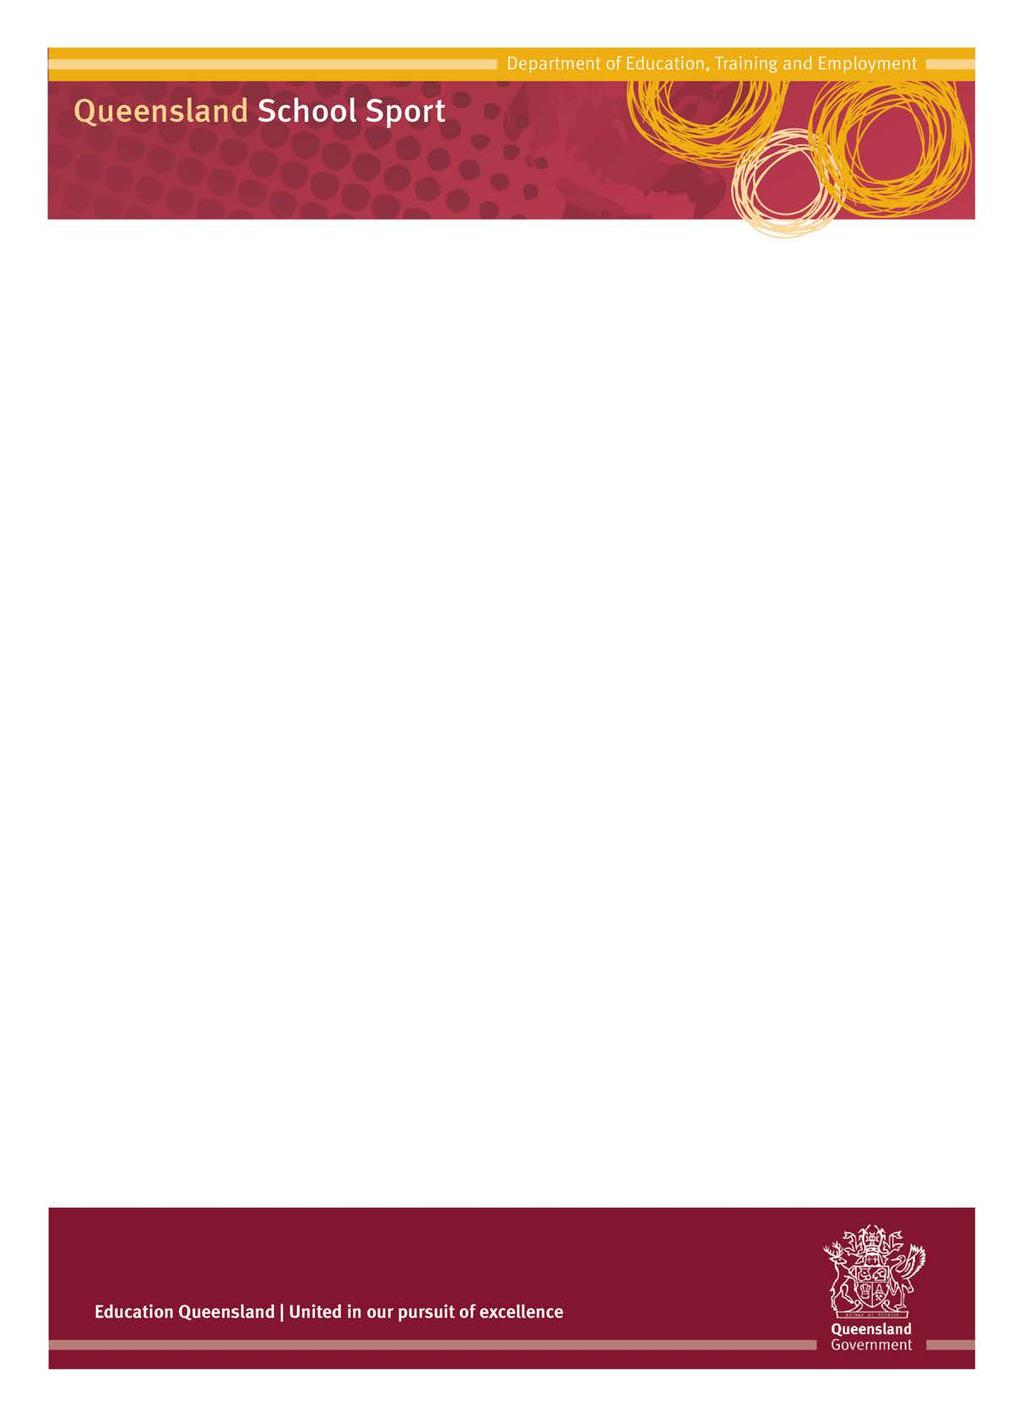 2014 QUEENSLAND SCHOOL SPORT 19YRS & UNDER BOYS HOCKEY STATE CHAMPIONSHIP CHAIR Glen Donald Gladstone State High School Secretary Murray James Kirwan State High School TREASURER Craig Martin -